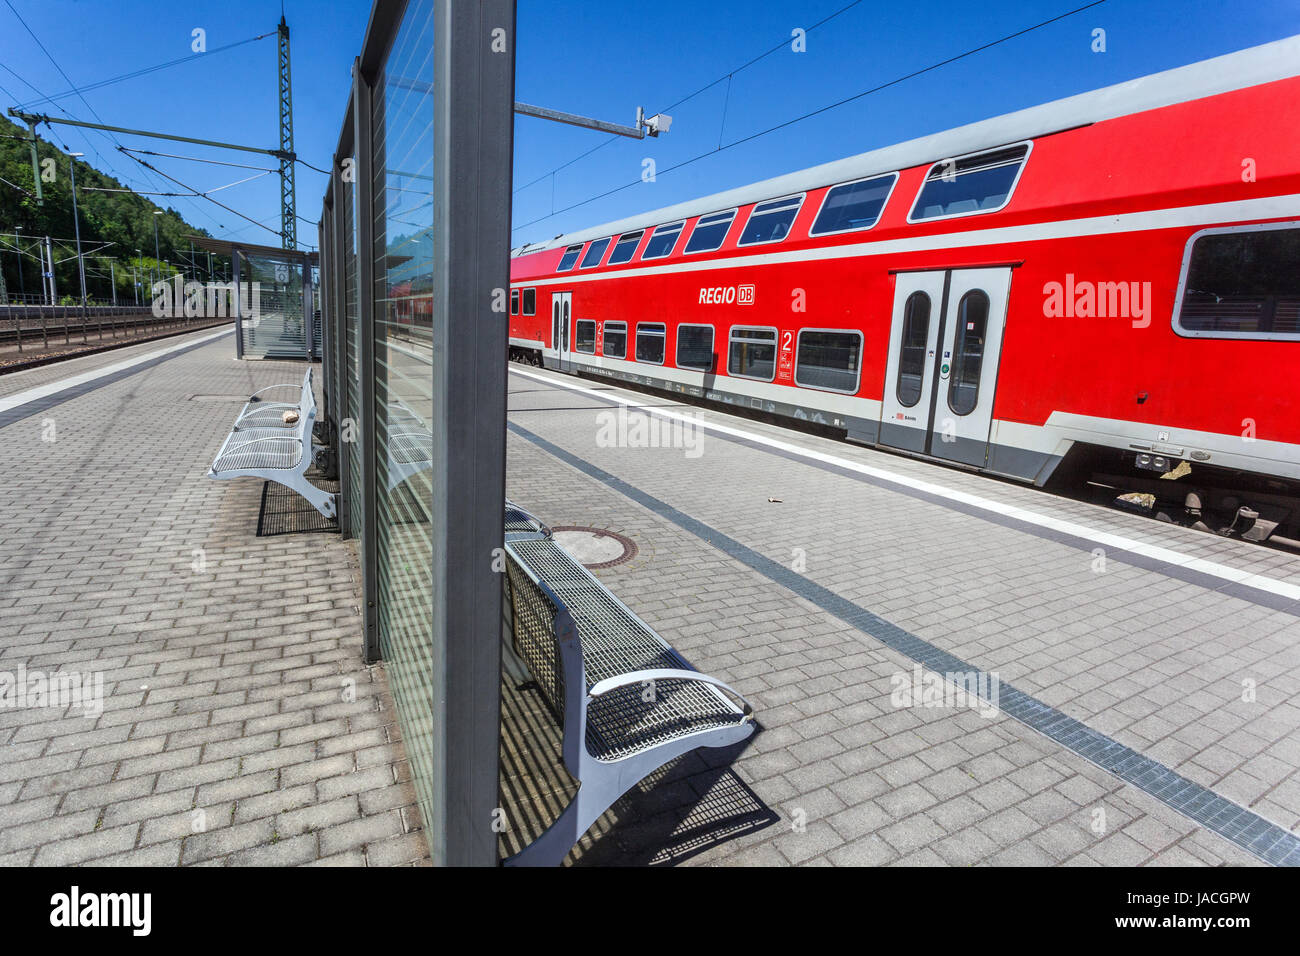 Regional Bahn, Bahnhof Bad Schandau, Deutschland, Europa Stockfoto